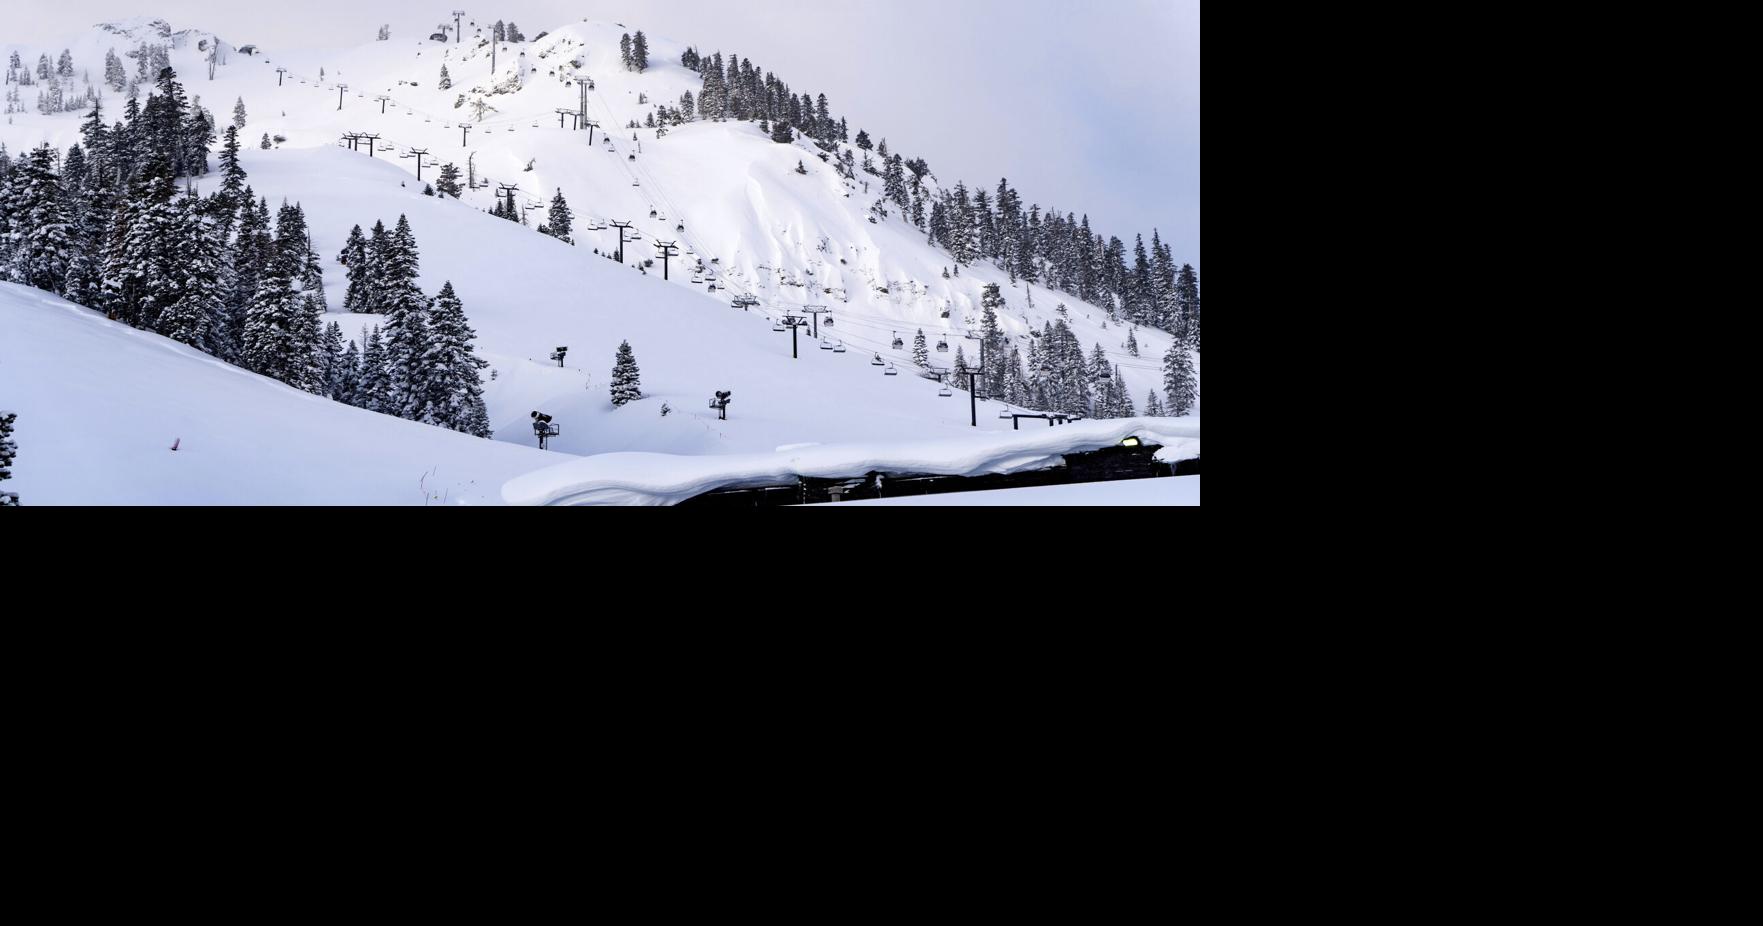 Relentless winter brings pros, cons for Tahoe ski resorts